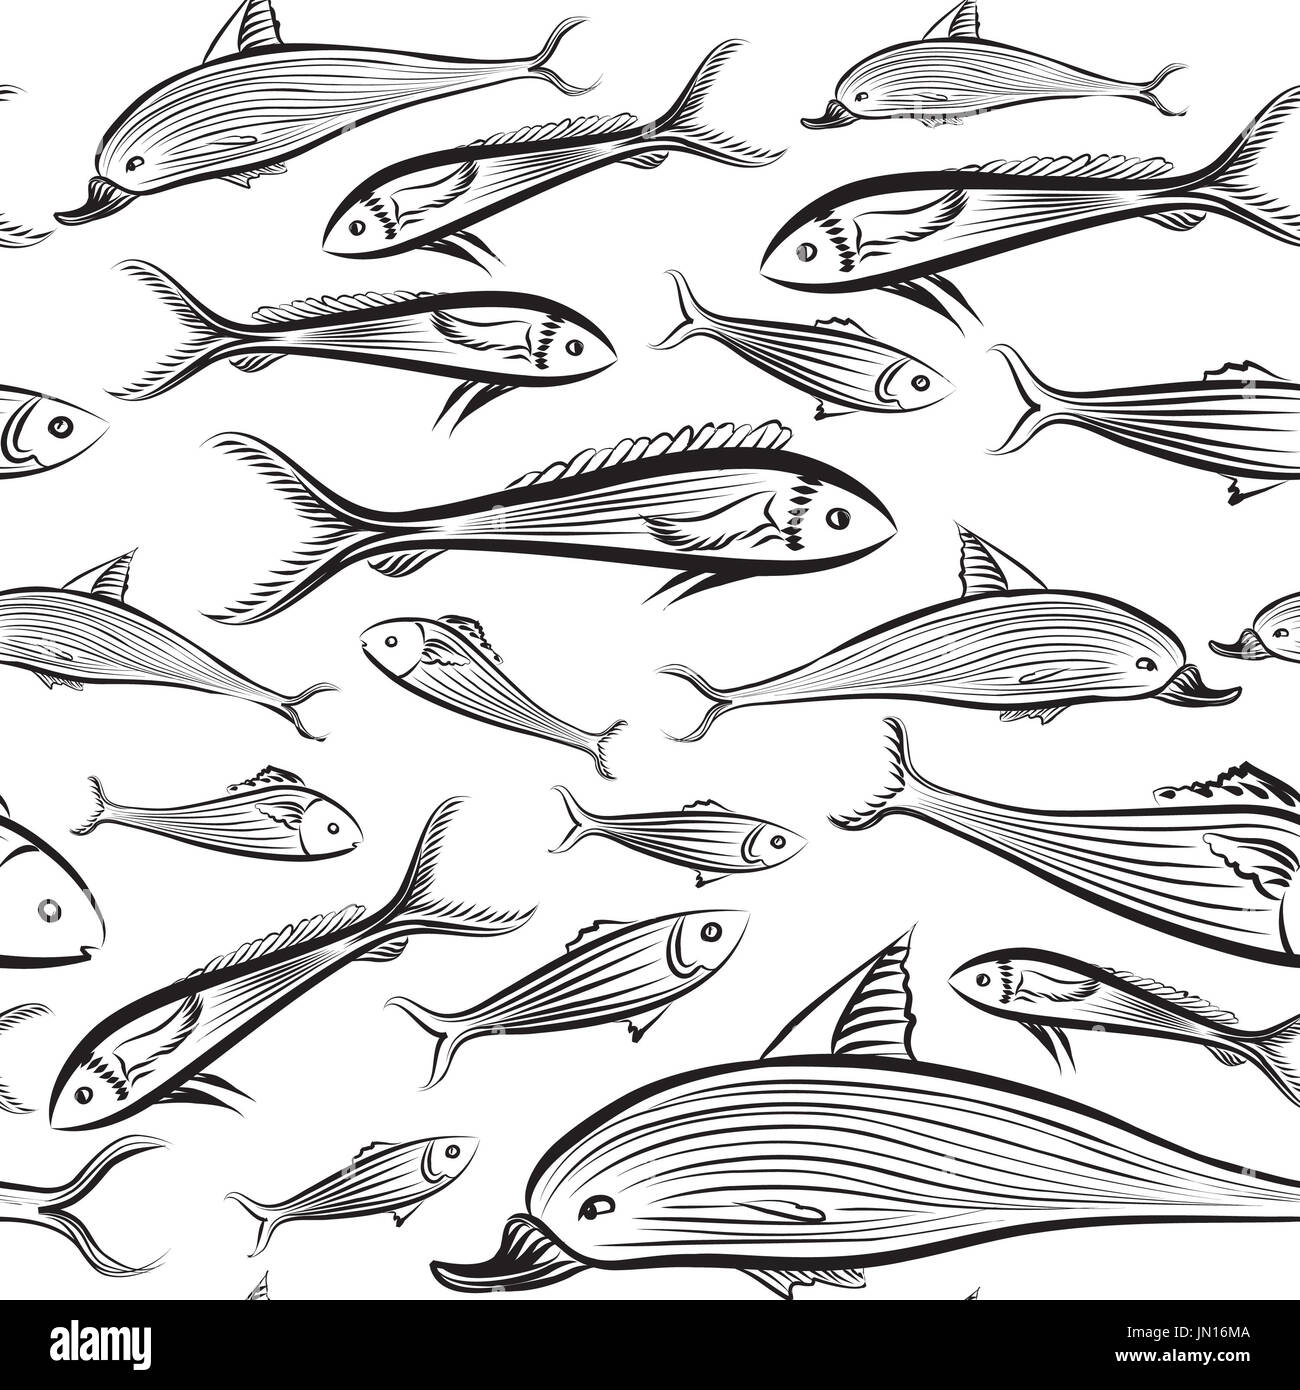 Fish seamless pattern. Sea food tiled background. Stock Photo